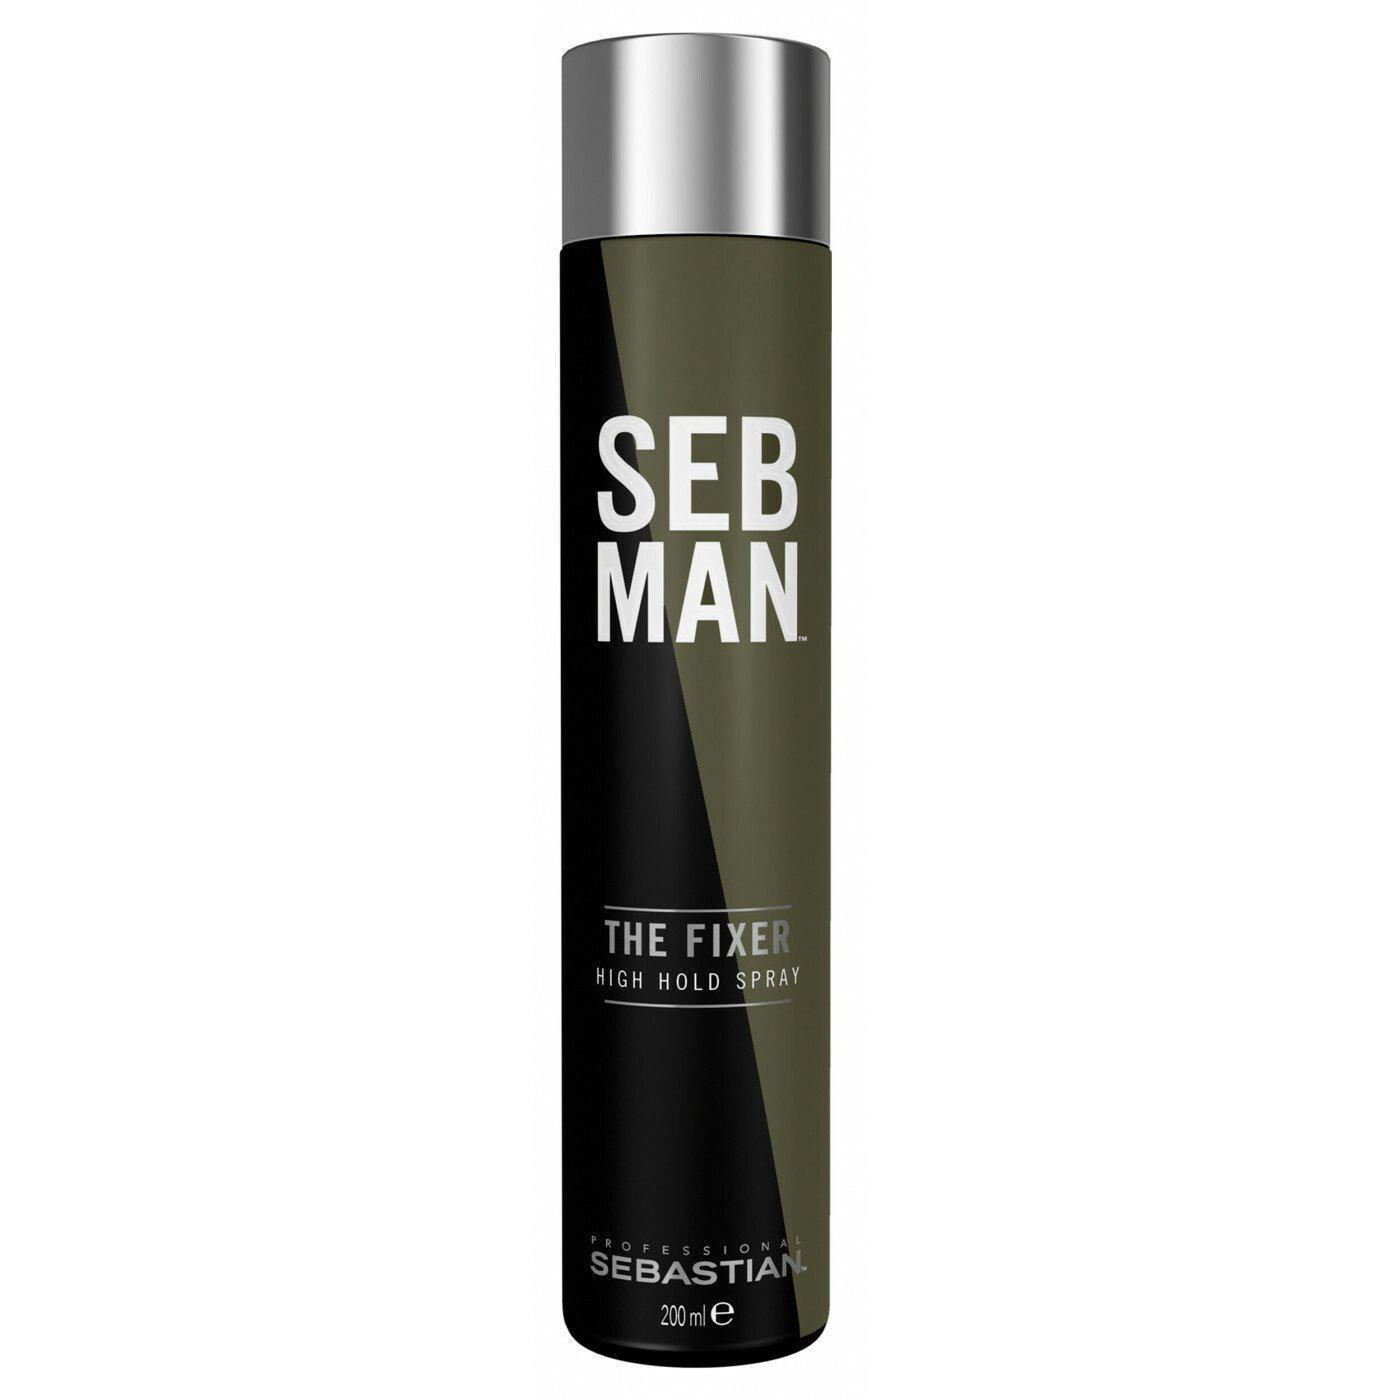 Seb Man The Fixer Hair Spray 200ml